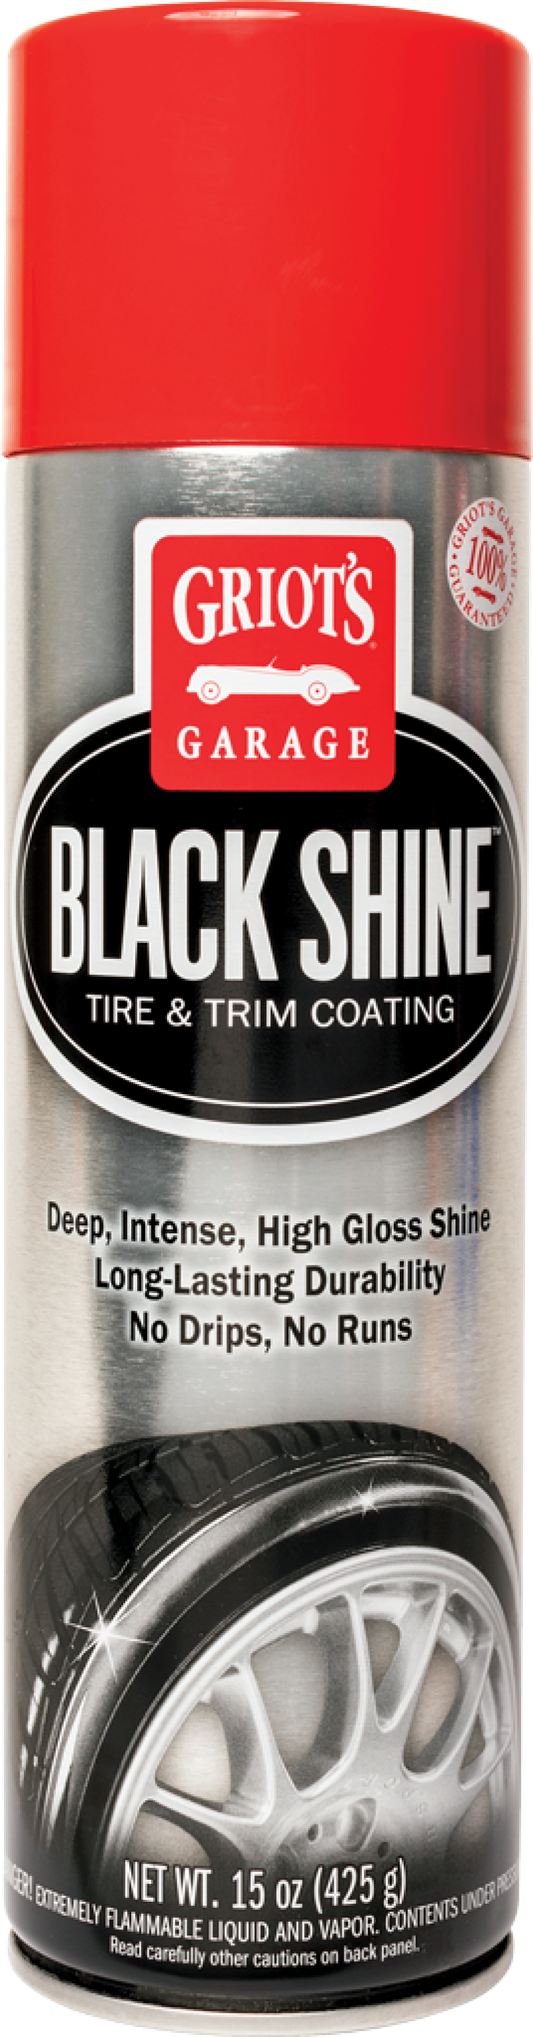 Griots Garage Black Shine Tire and Trim Coating - 15oz - Single